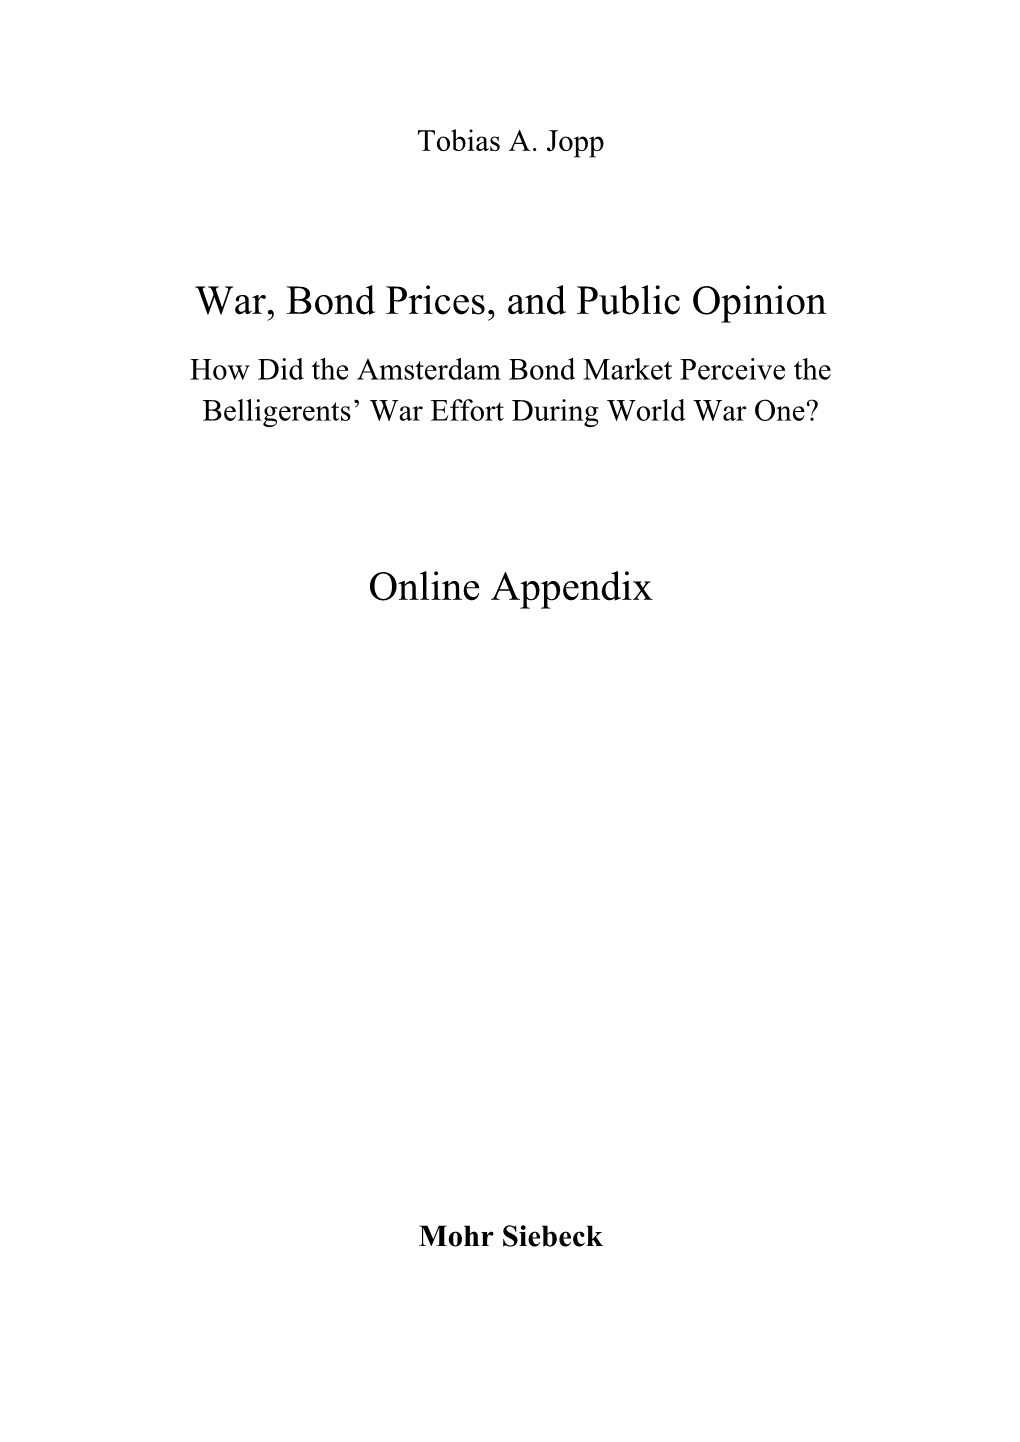 War, Bond Prices, and Public Opinion Online Appendix